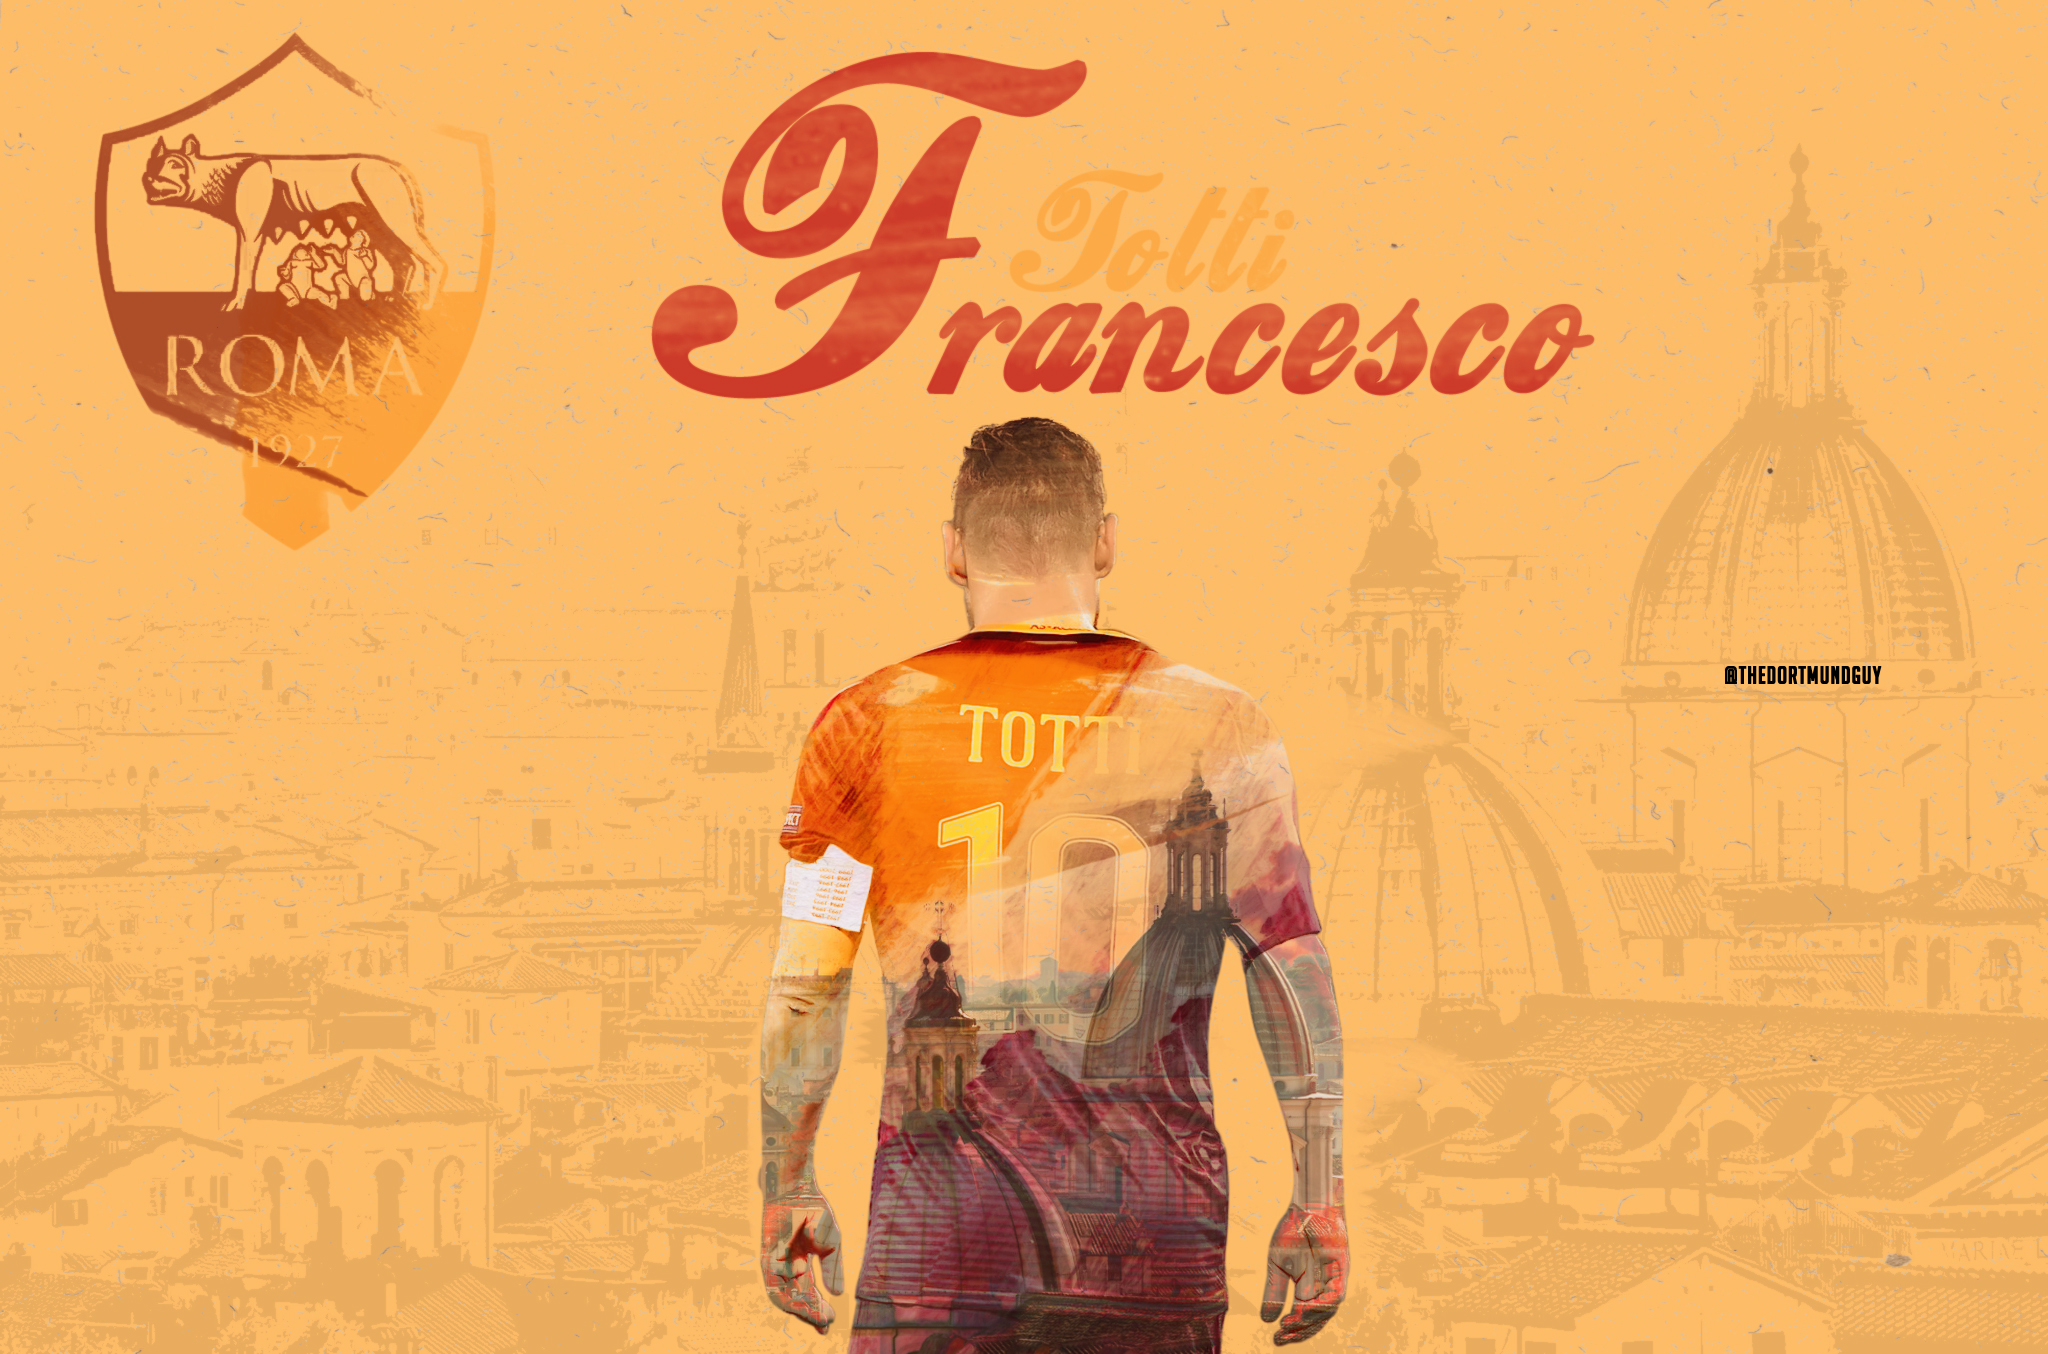 Sports Francesco Totti HD Wallpaper | Background Image